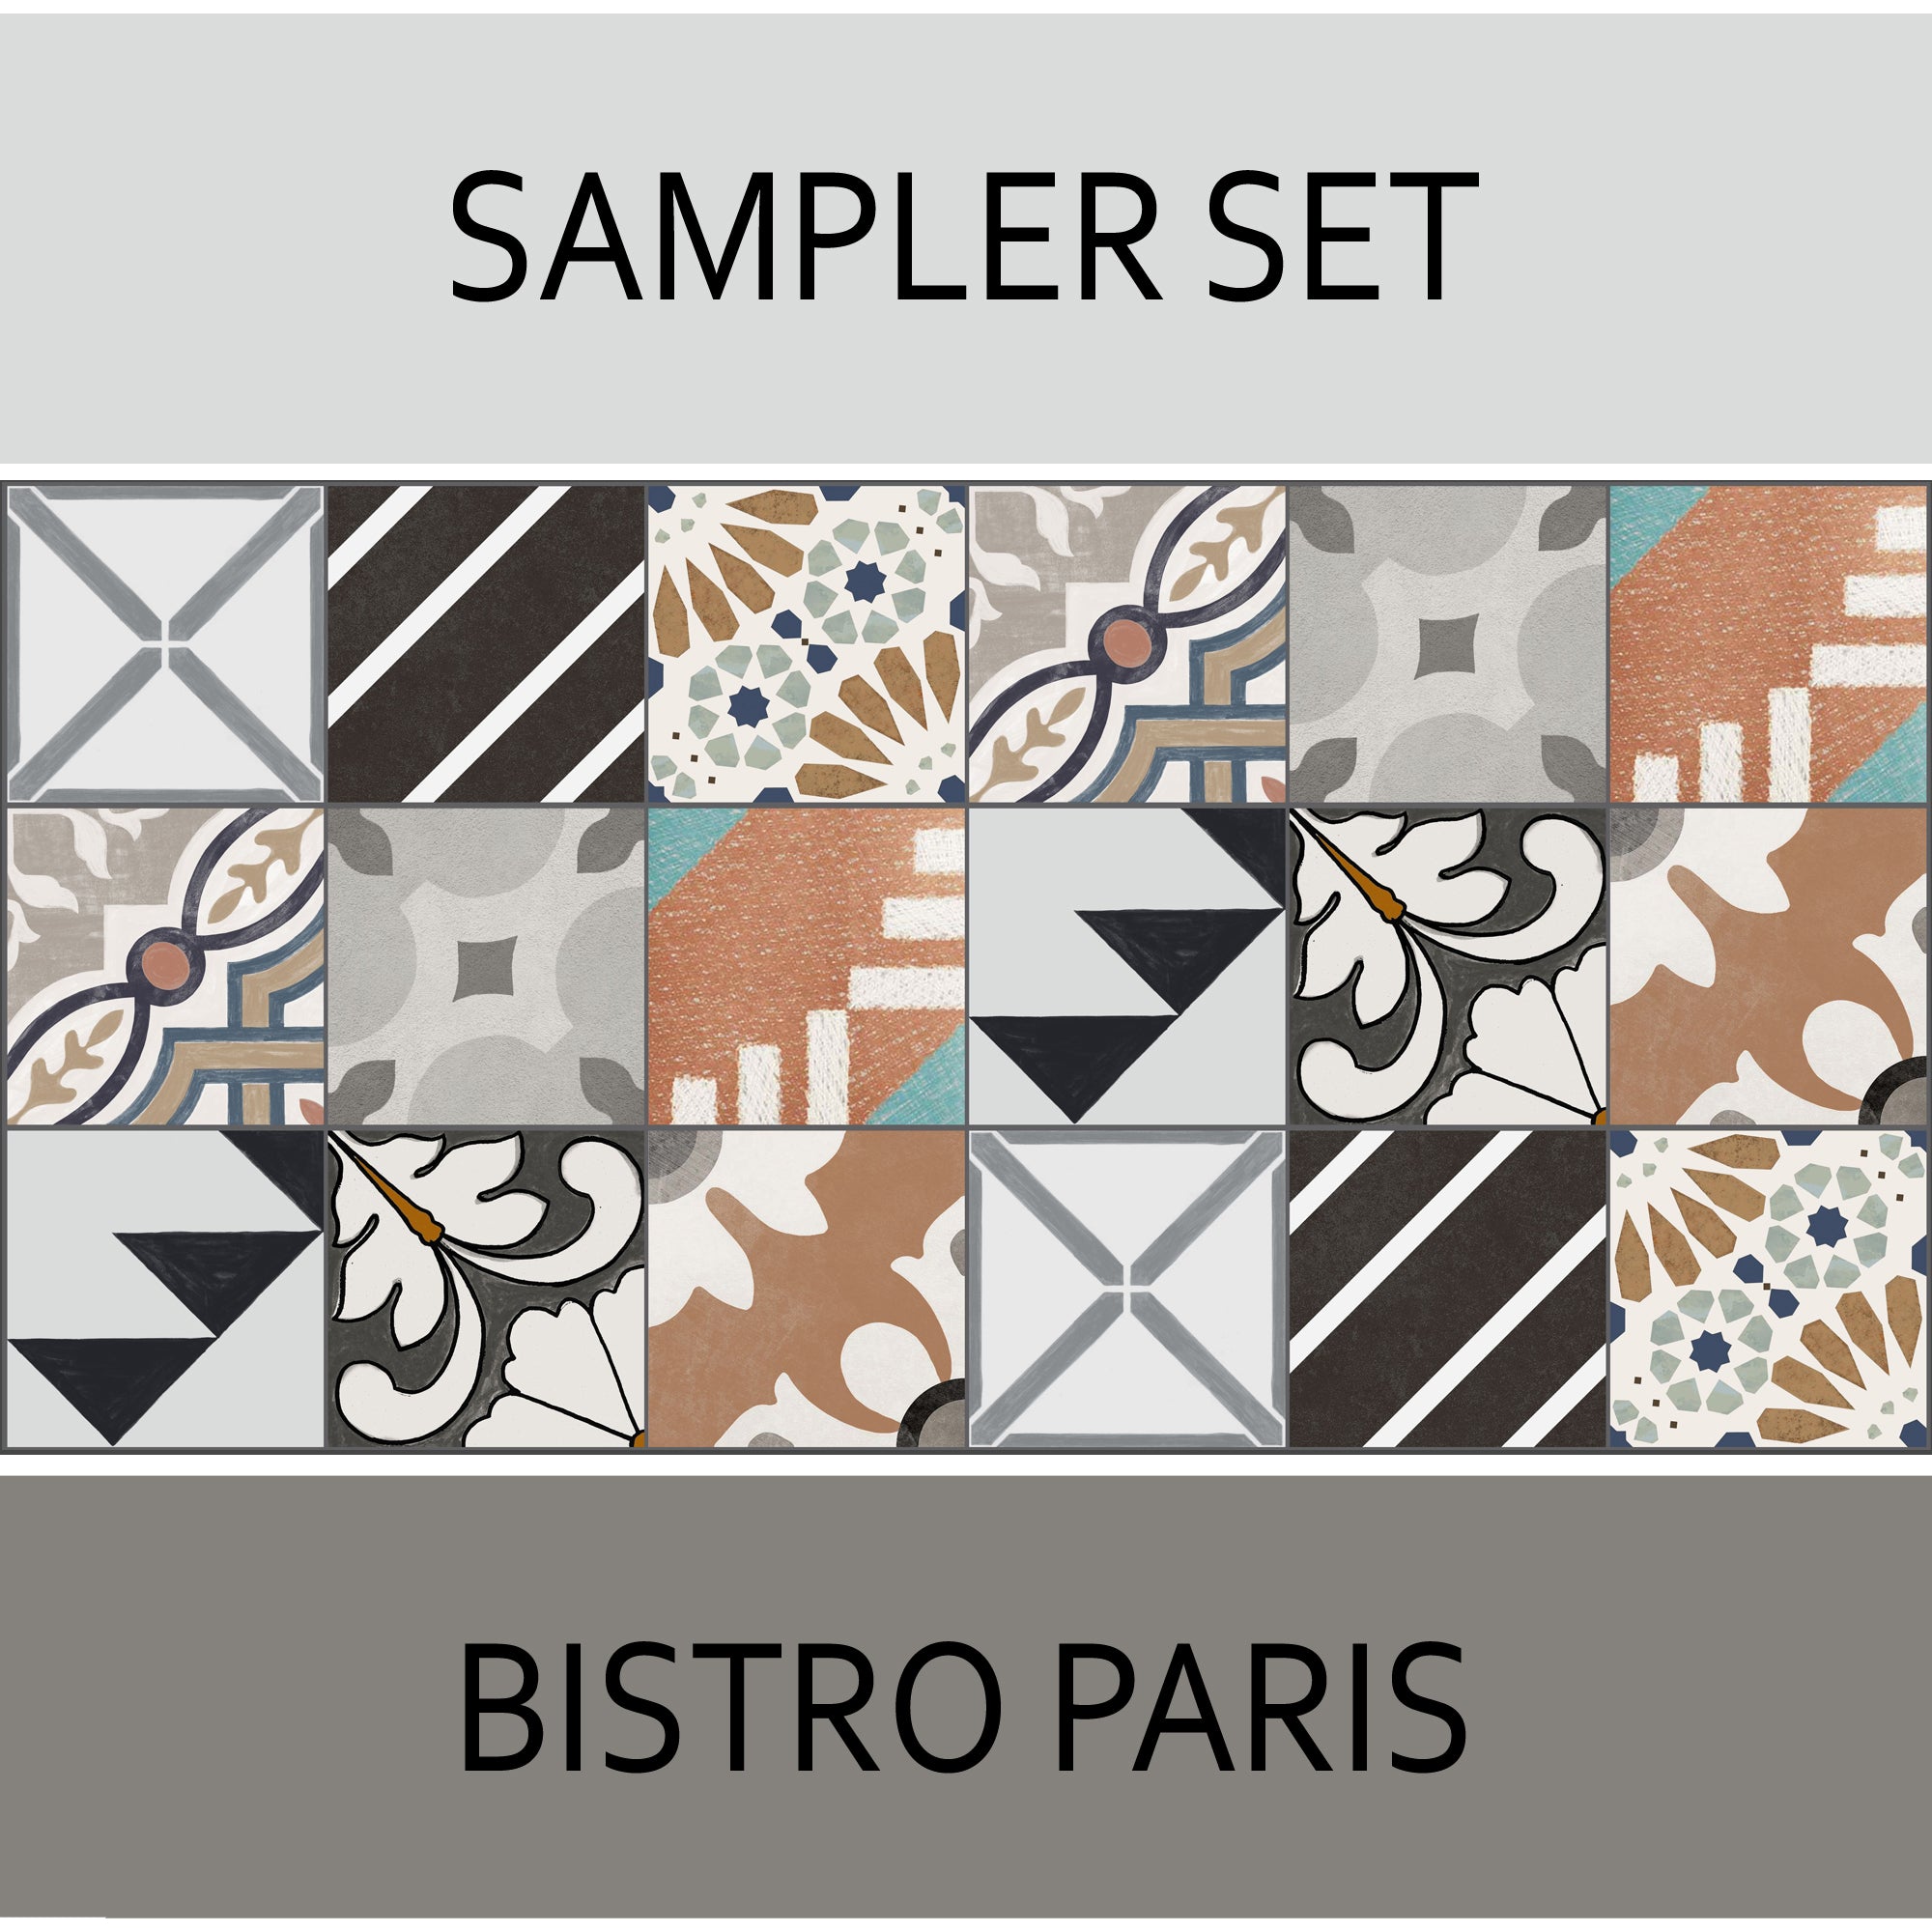 Quadrostyle 18 Bistro Paris Collection Tile Sticker Sampler Set inc. Free Shipping